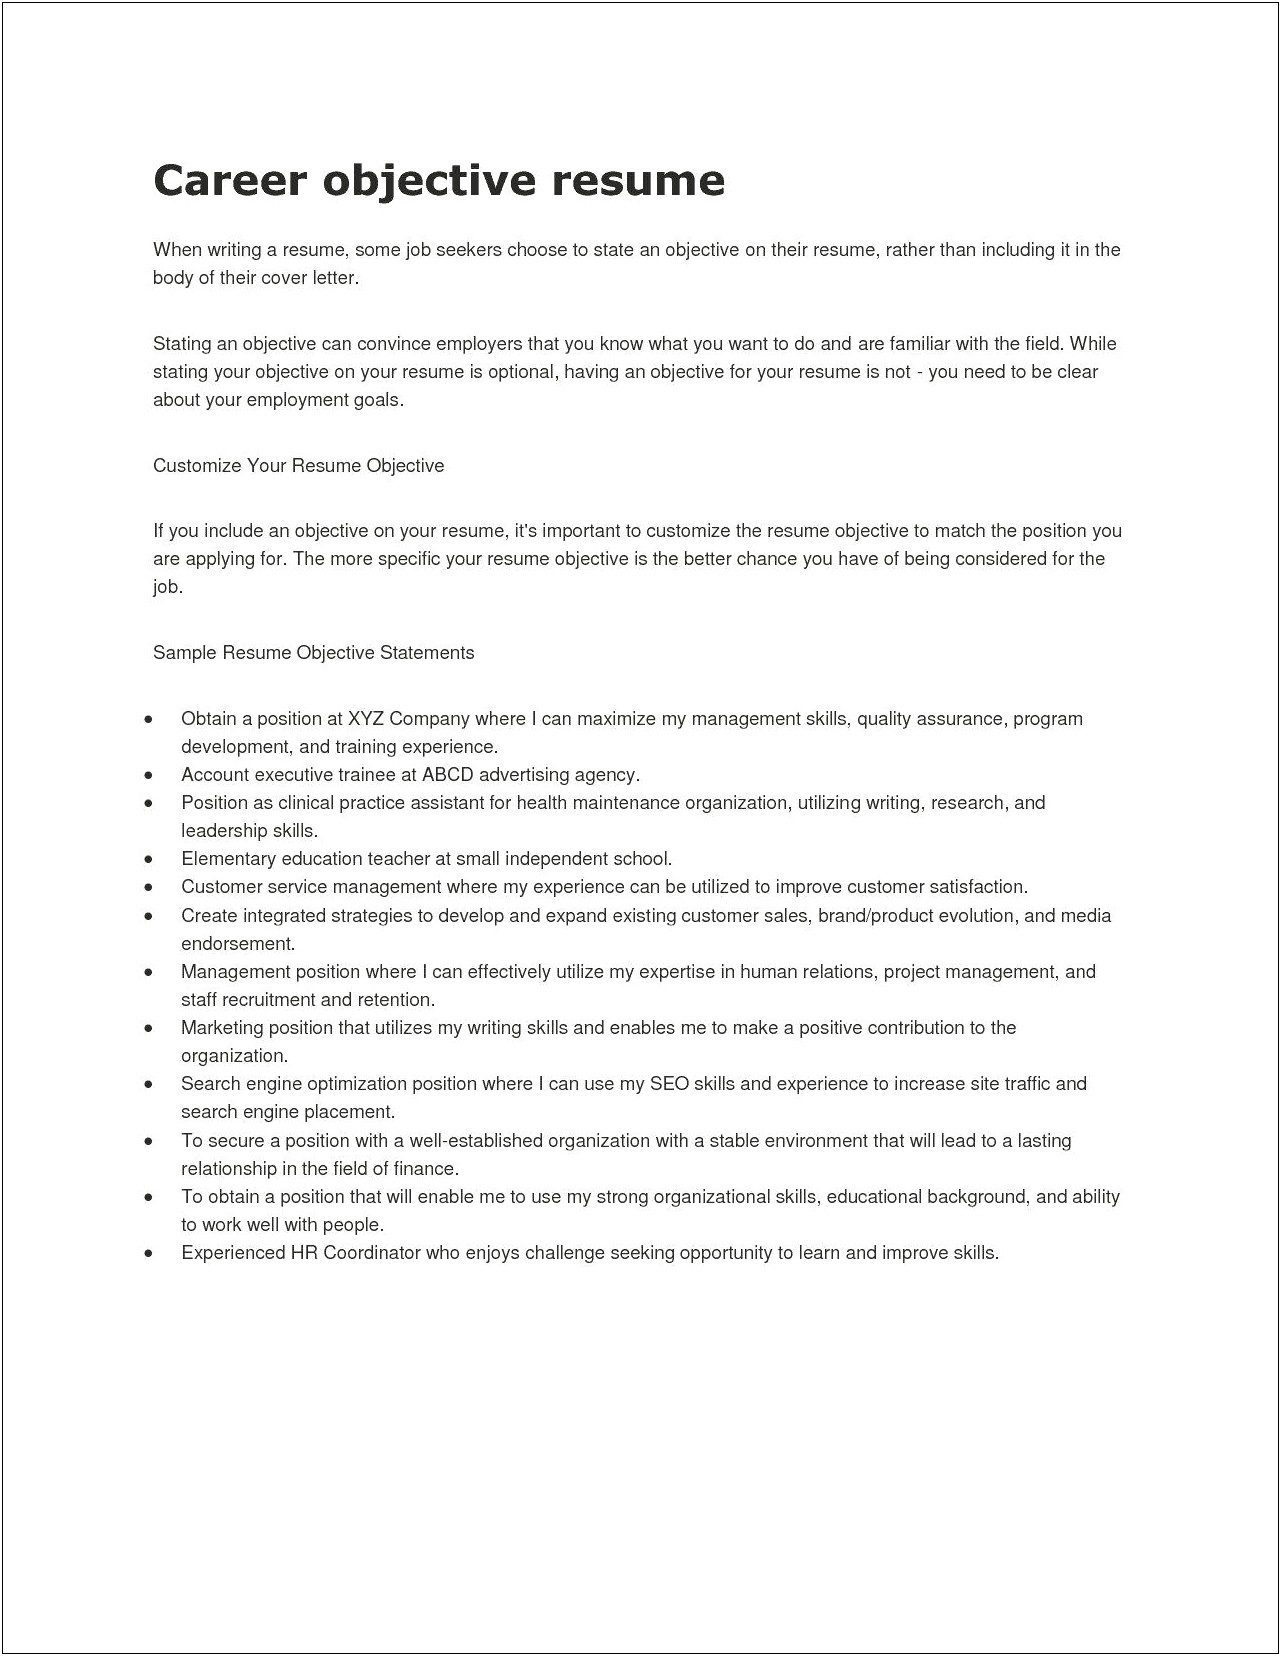 Career Fair Resume Objective Examples